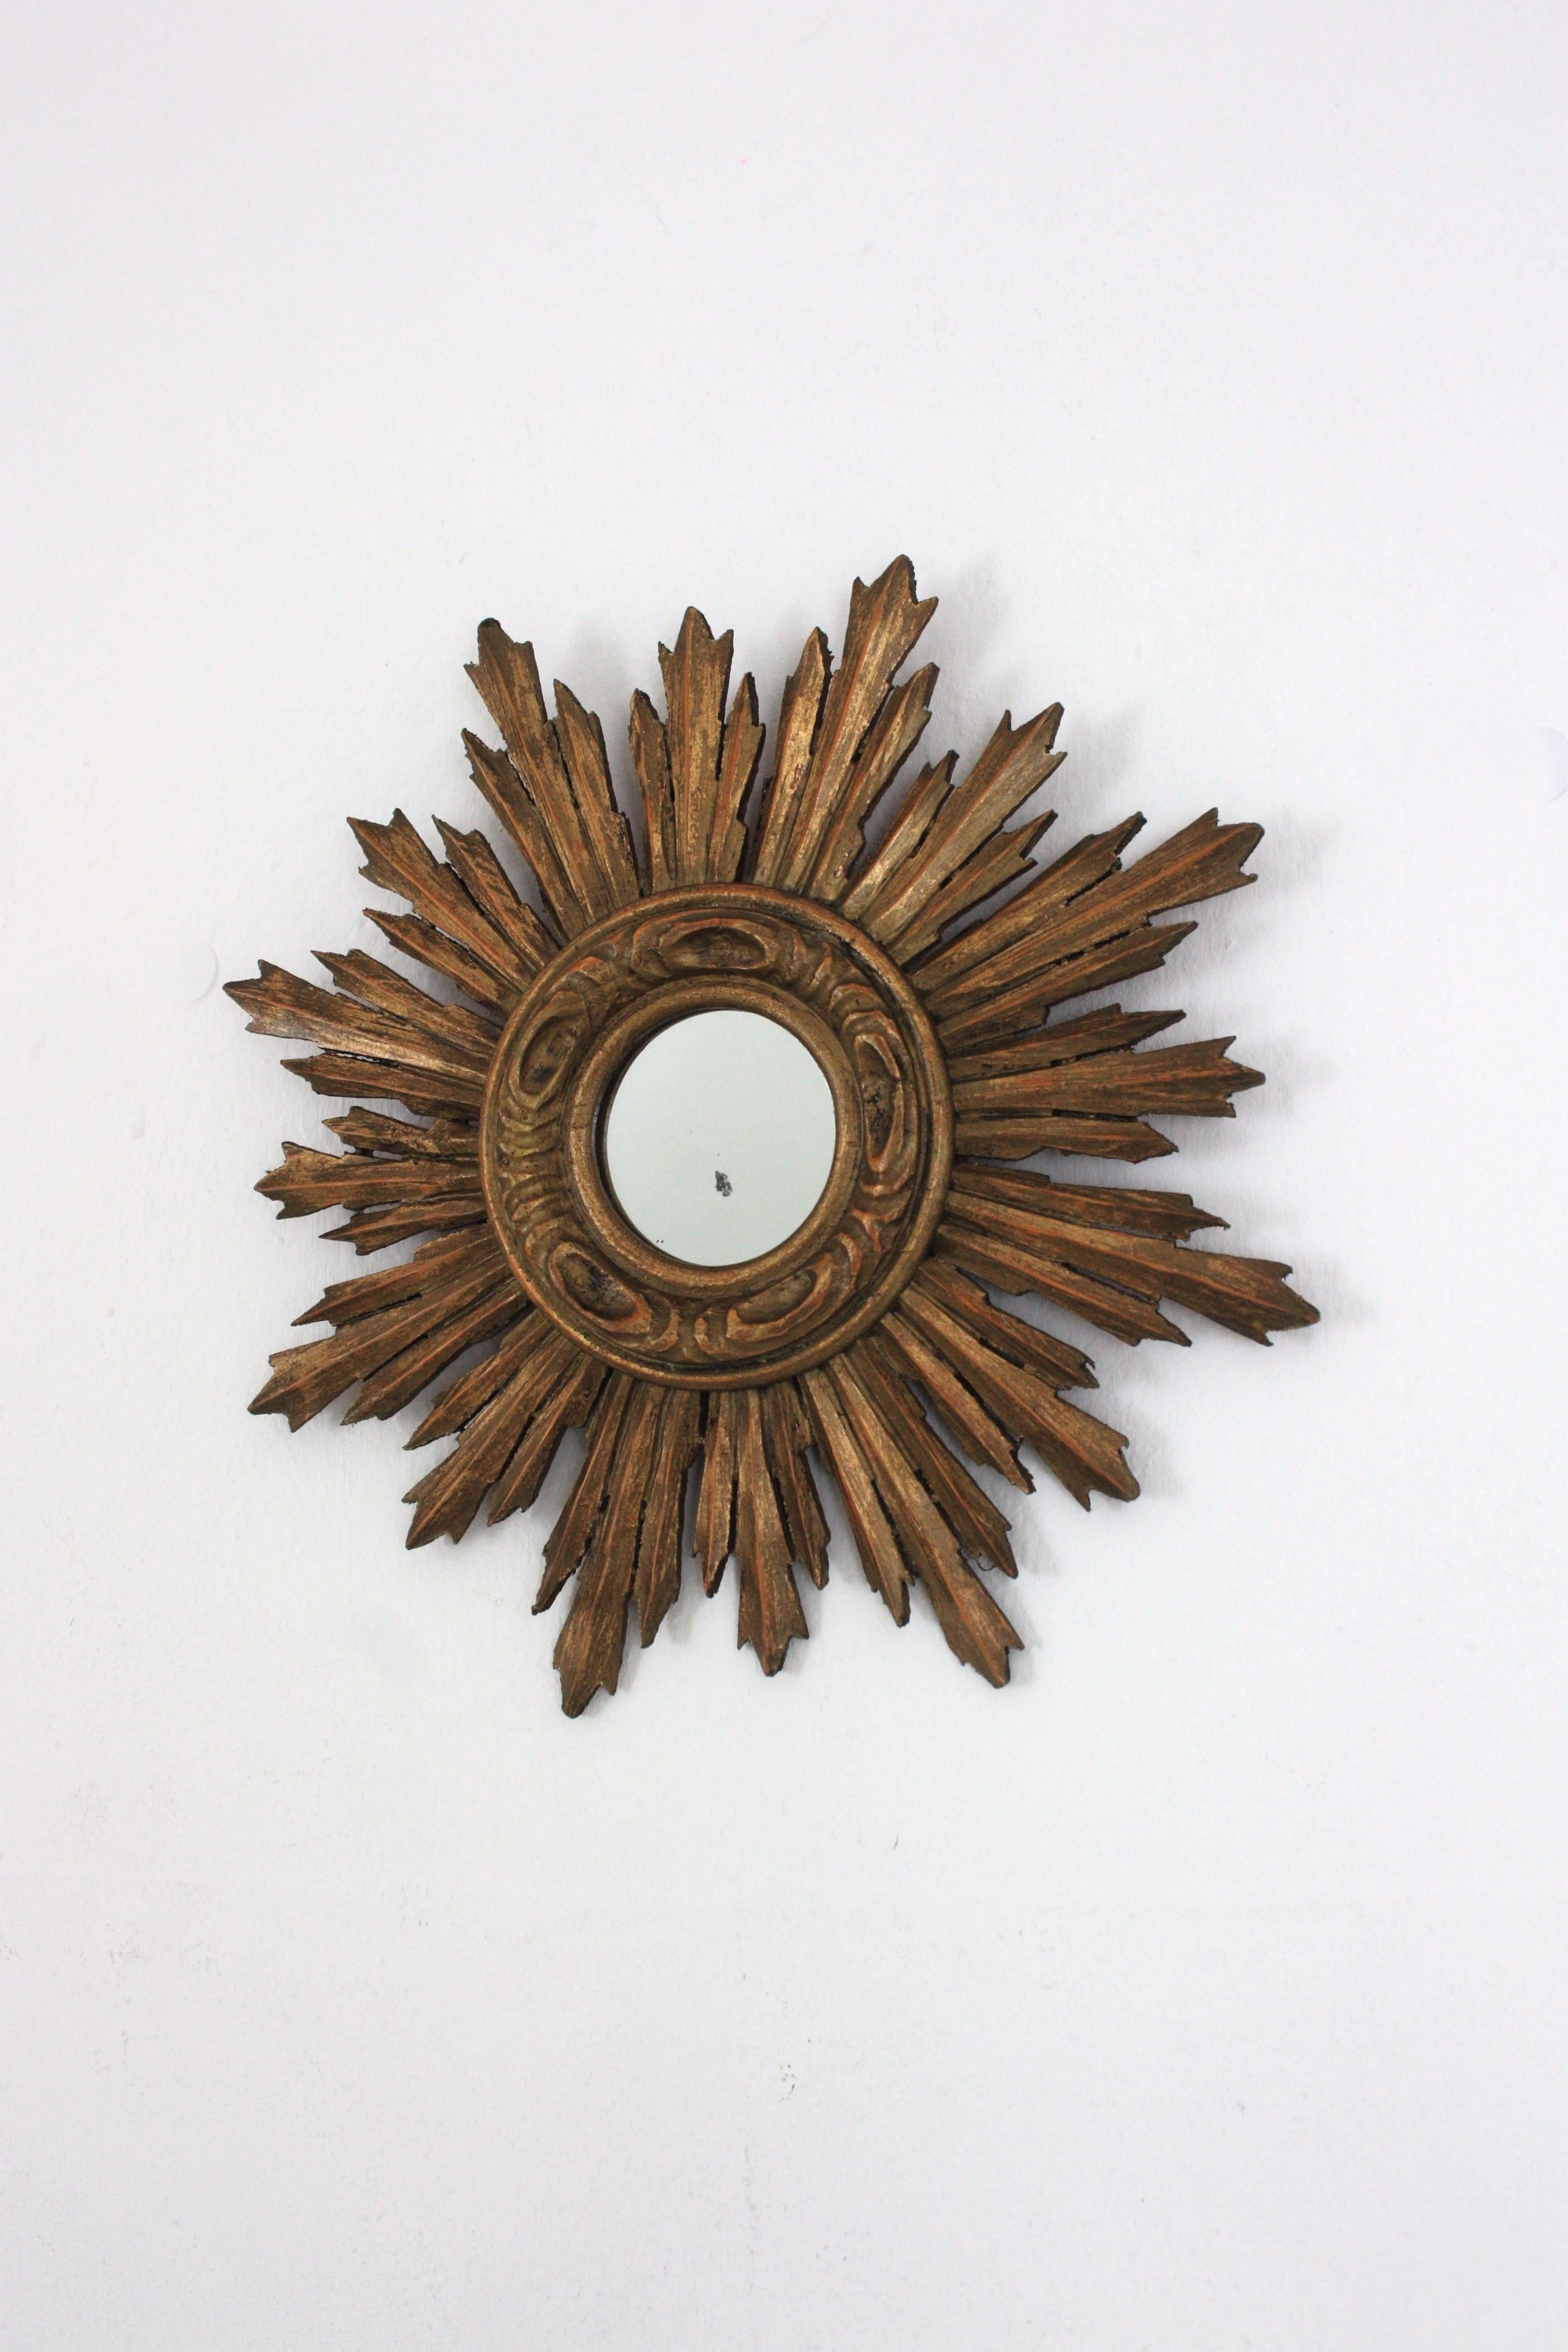 Sunburst Giltwood Mirror in Small Scale, Spanish Baroque  For Sale 6